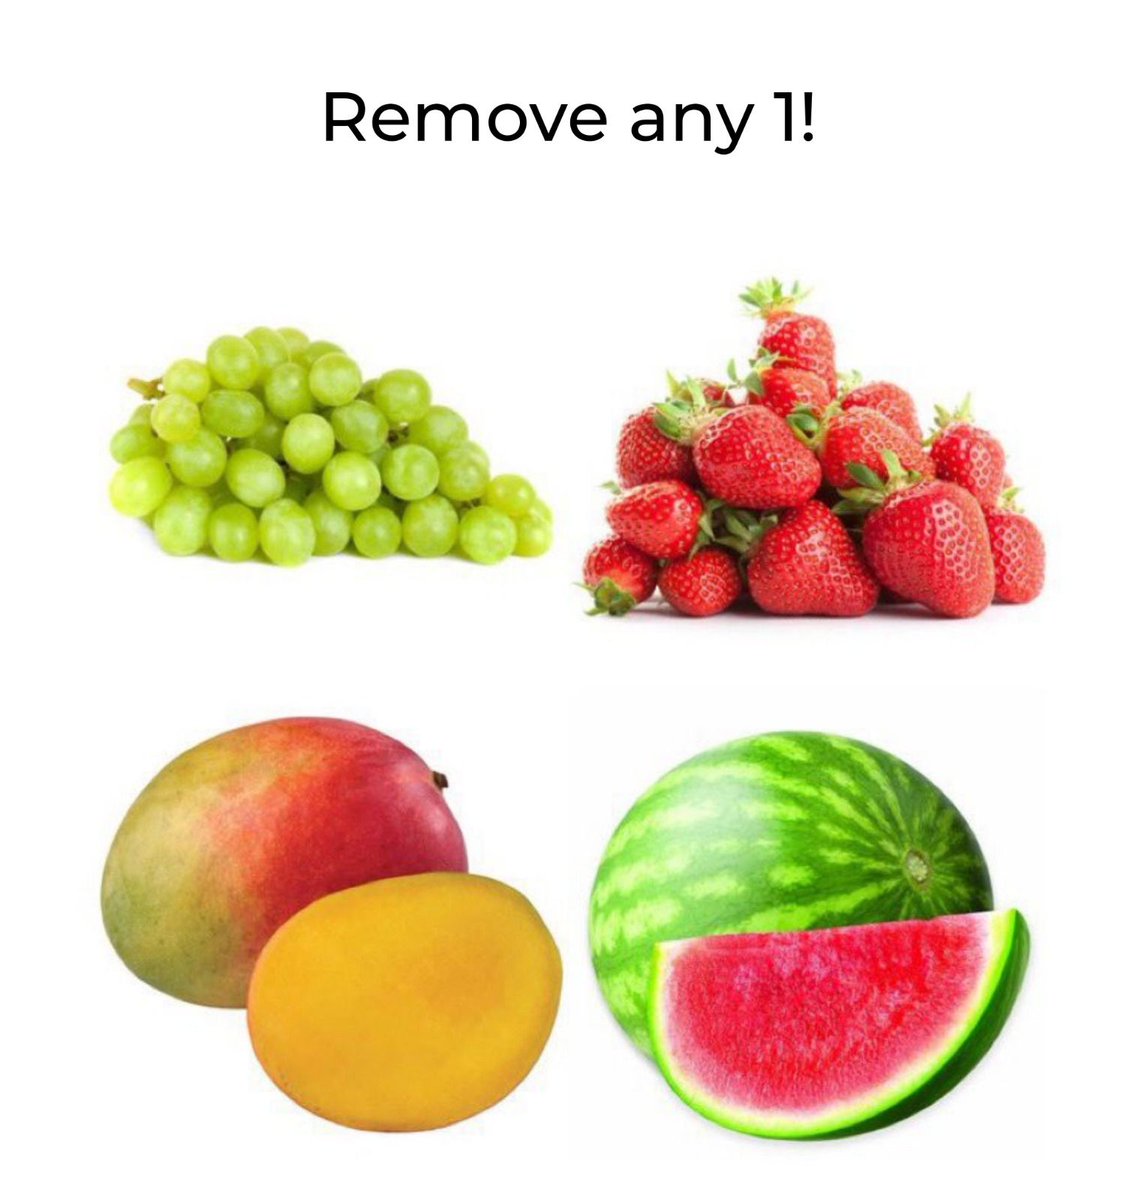 Remove any 1 fruit!
👍🏻- Grapes
😂- Strawberry
❤️- Mango
🙏🏻- Watermelon